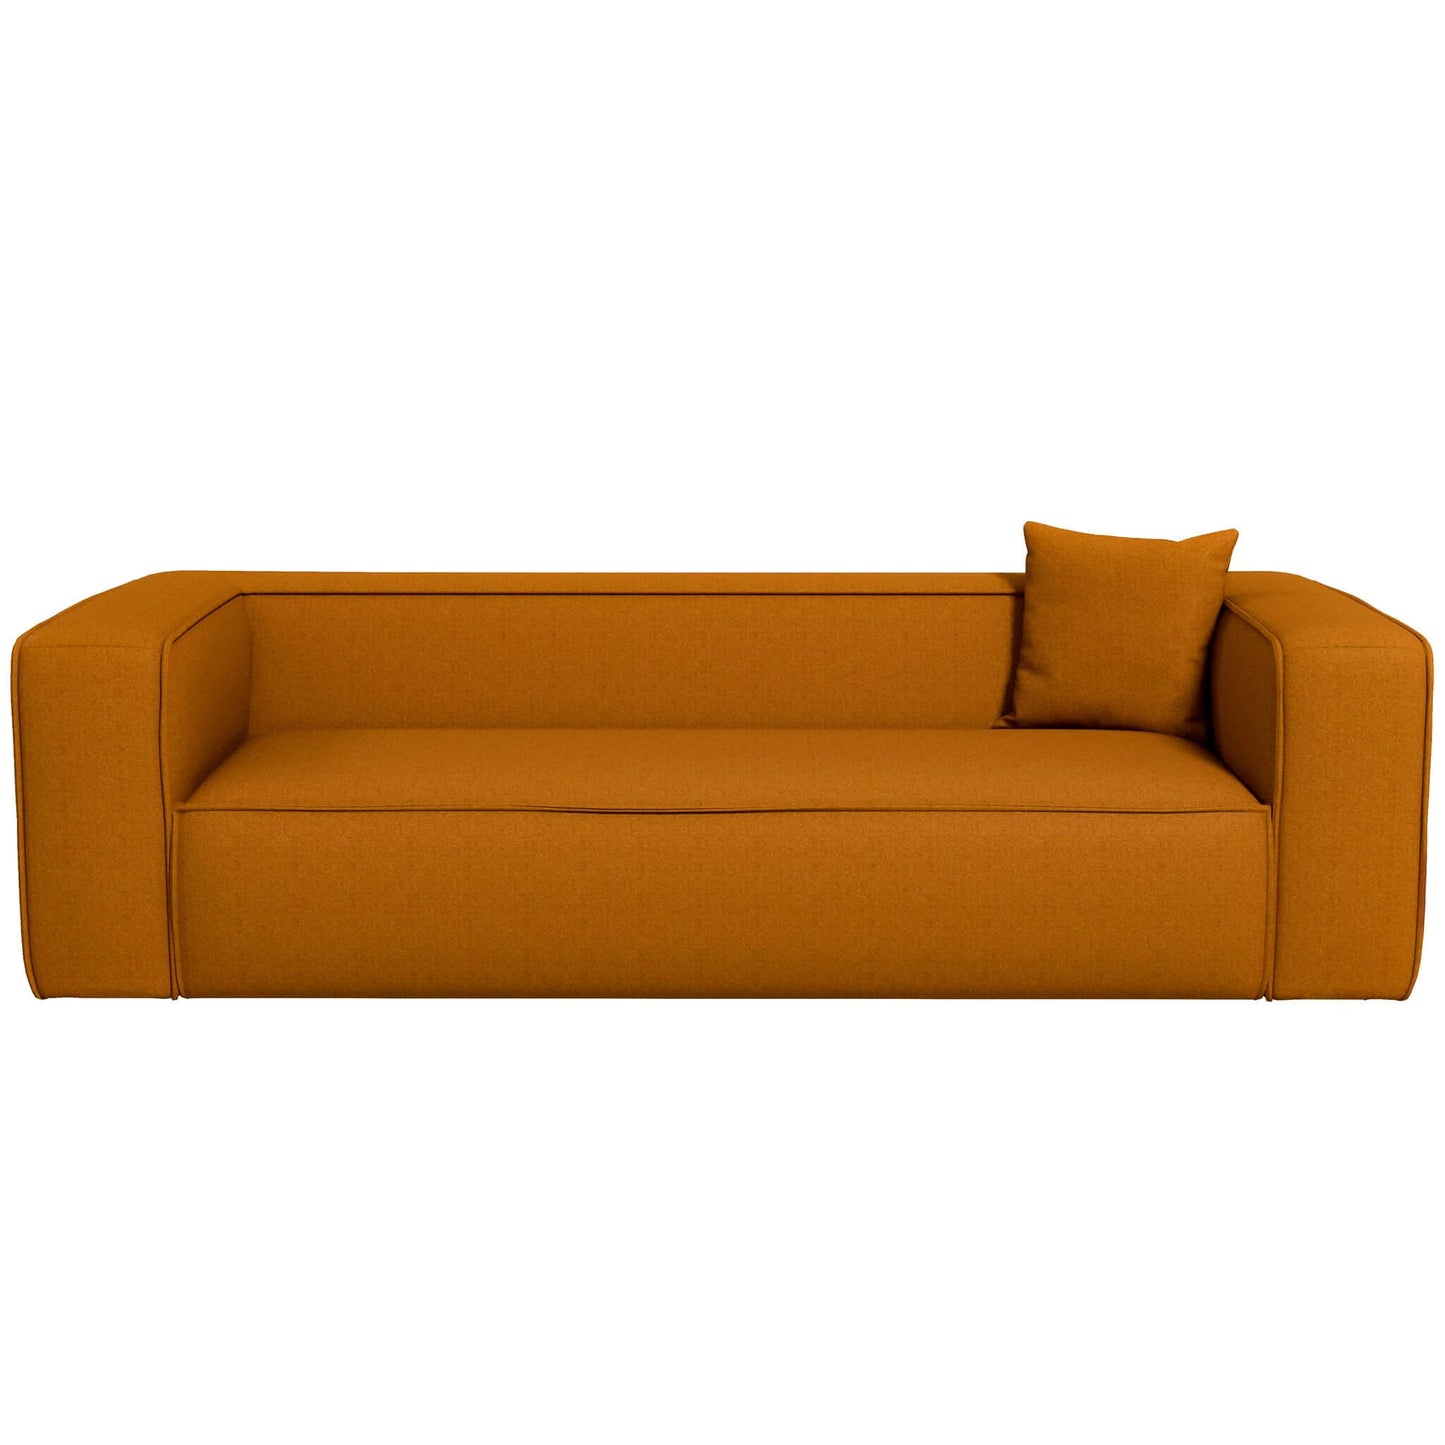 Ashcroft Furniture Co Sofas Marshall Modern Dark Yellow Boucle Sofa